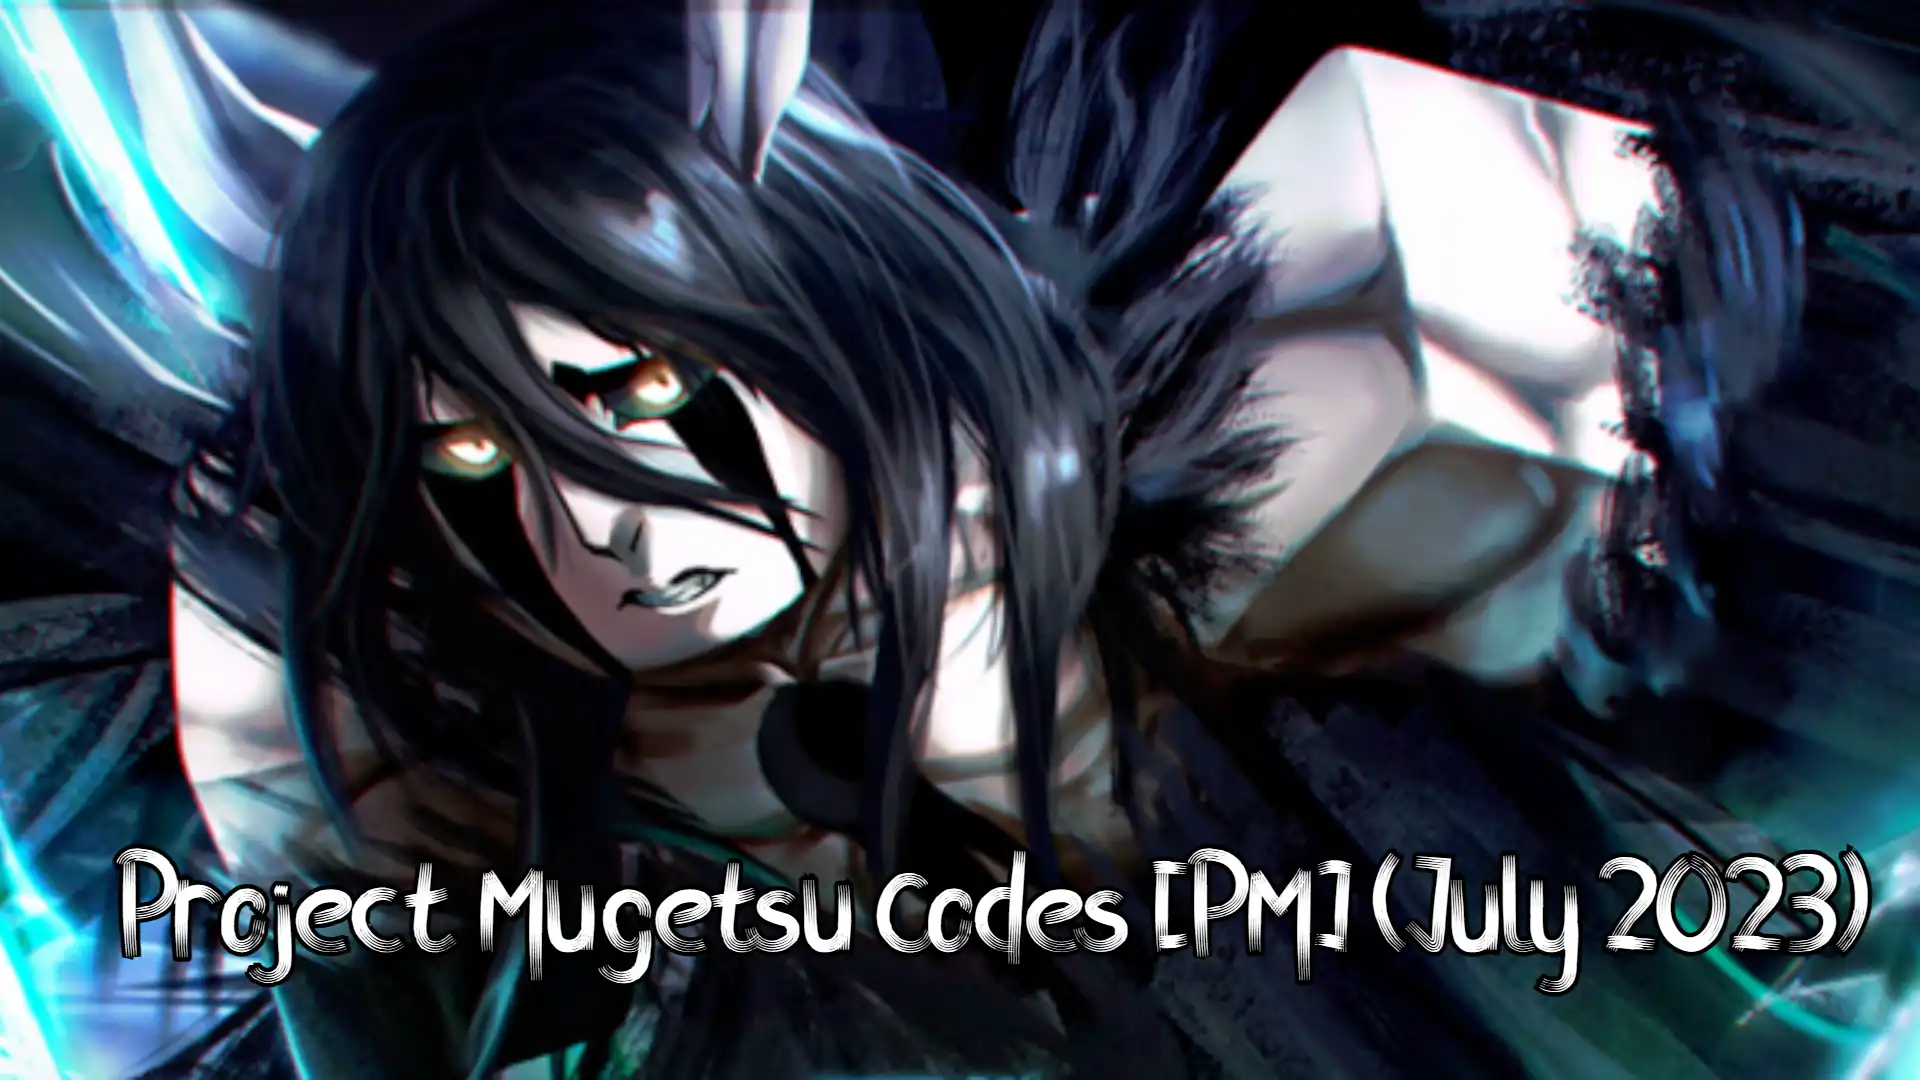 Project Mugetsu Codes [PM] (July 2023) - Get Free Rewards